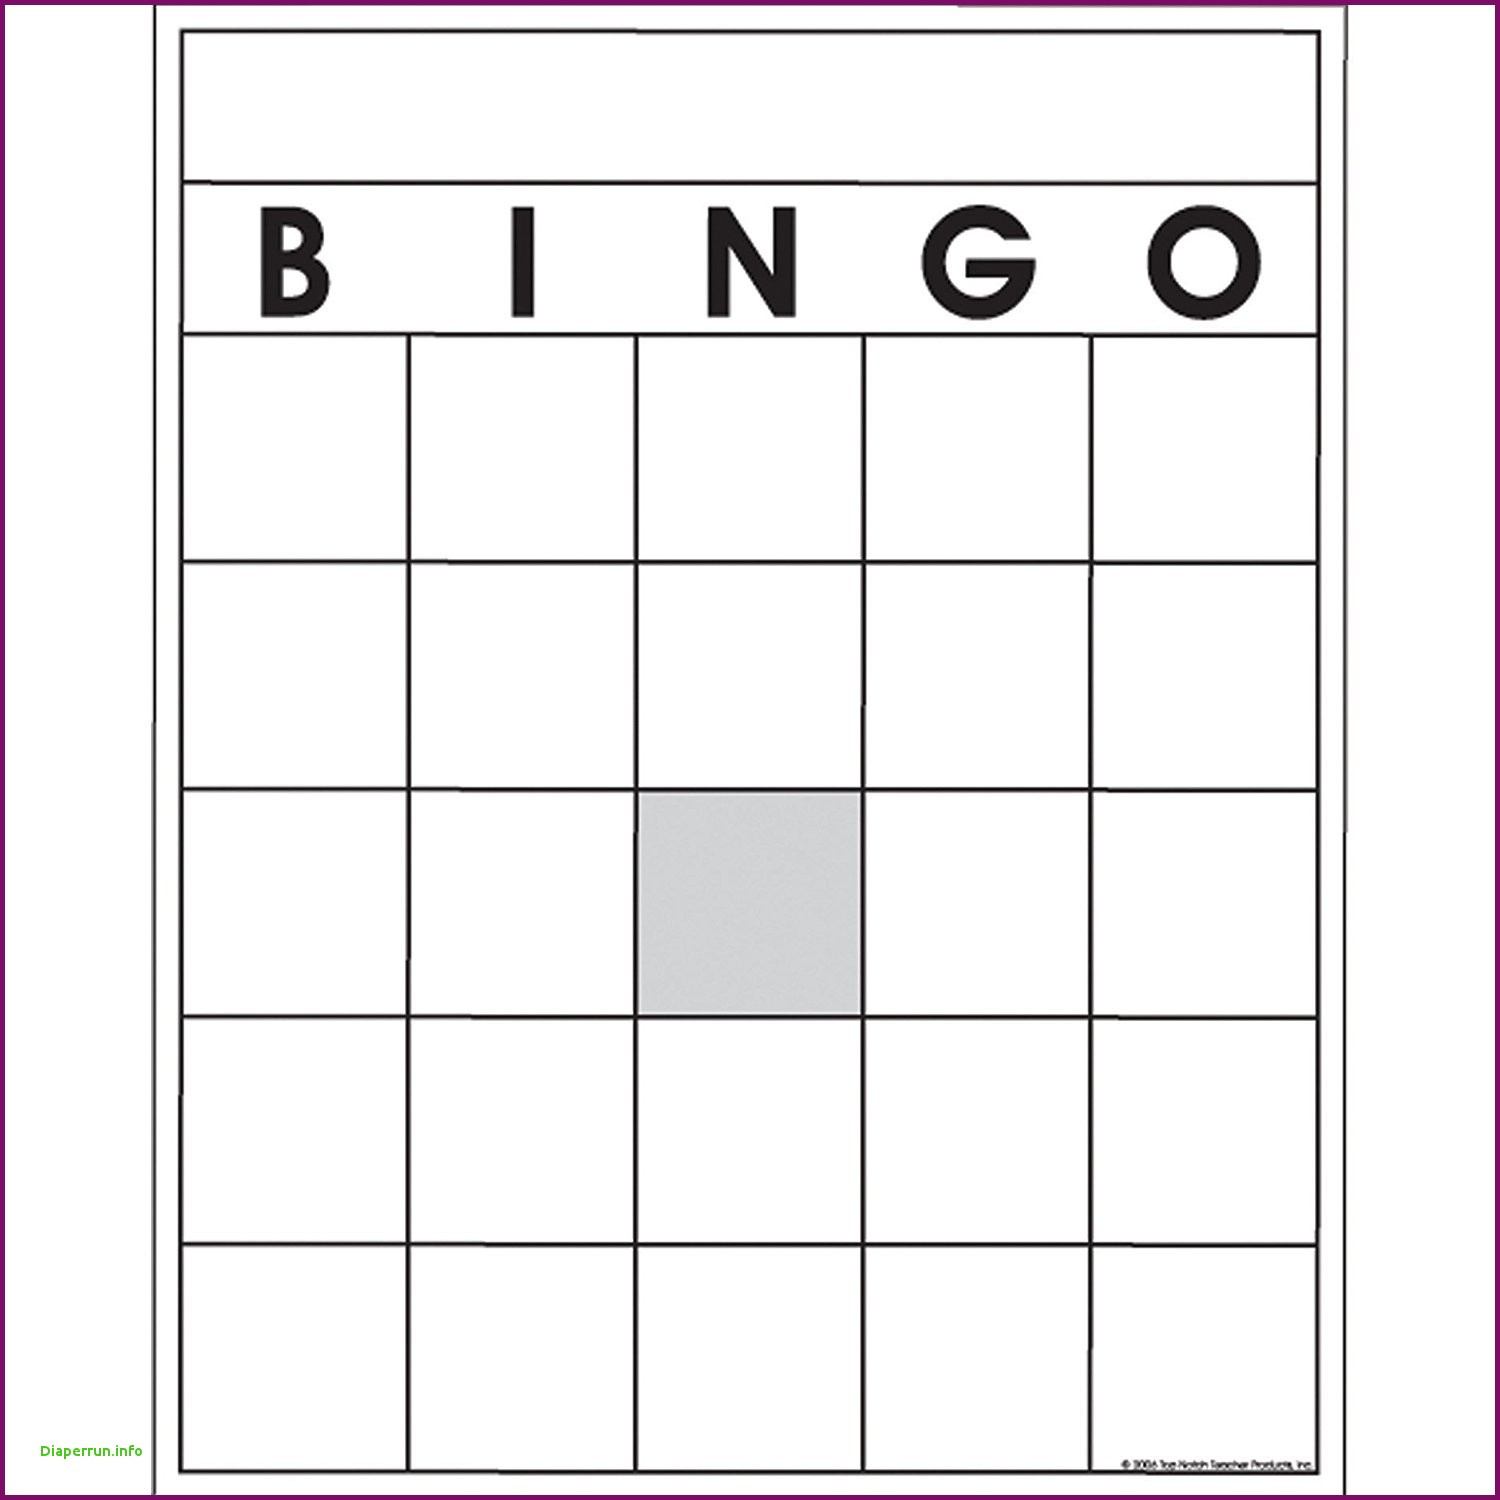 Bingo Spreadsheet Template Google Spreadshee bingo spreadsheet template.